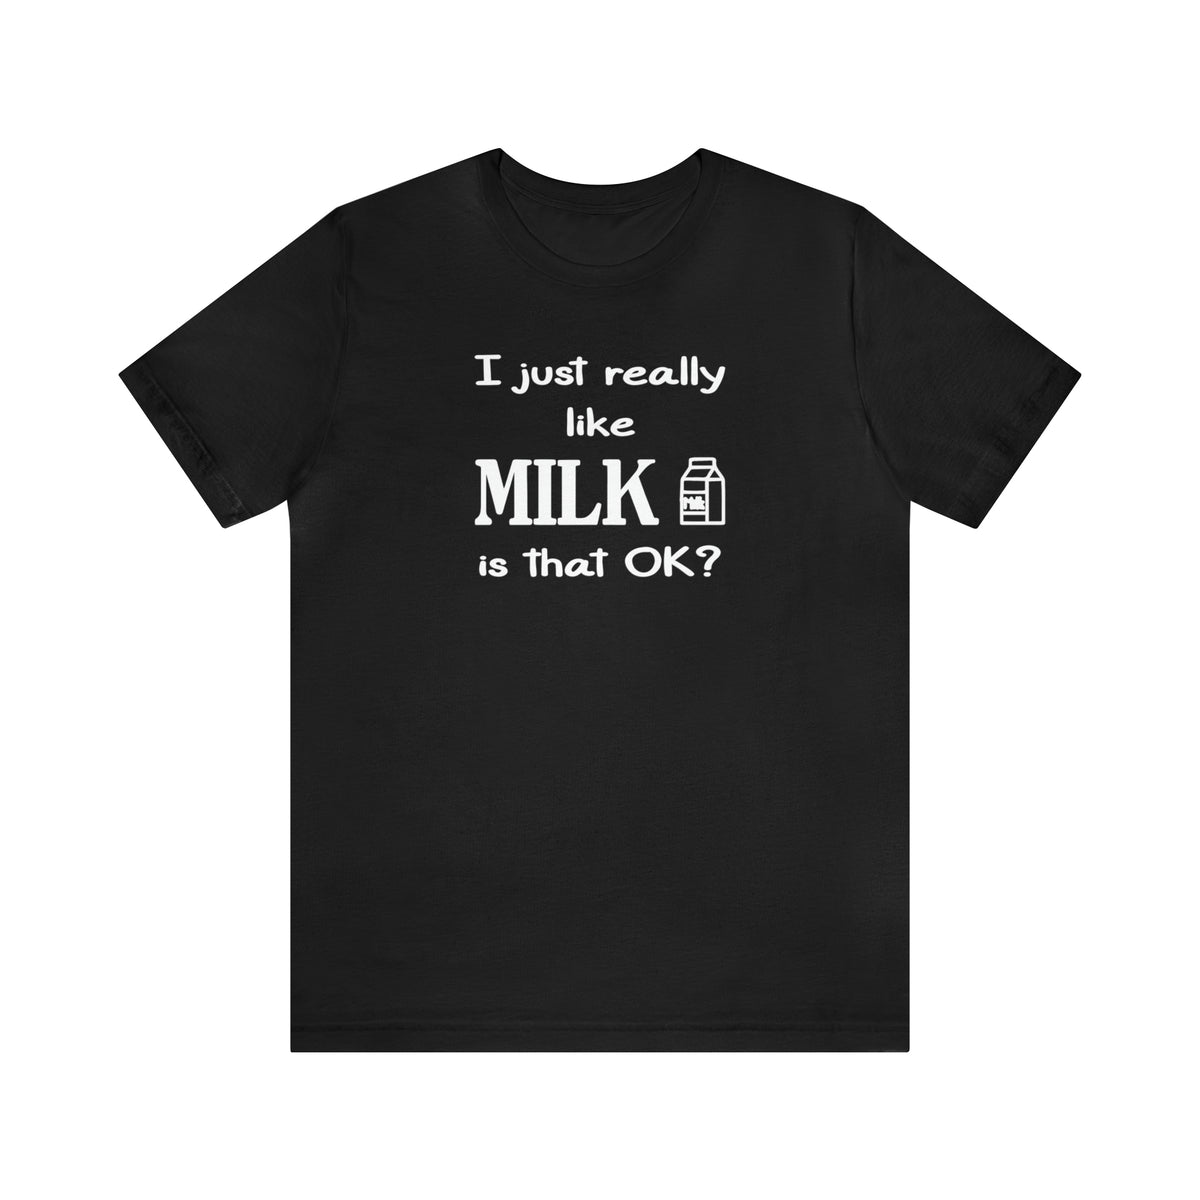 Funny Shirt For Milk Lovers - Birthday Present - Christmas Gift - Tee